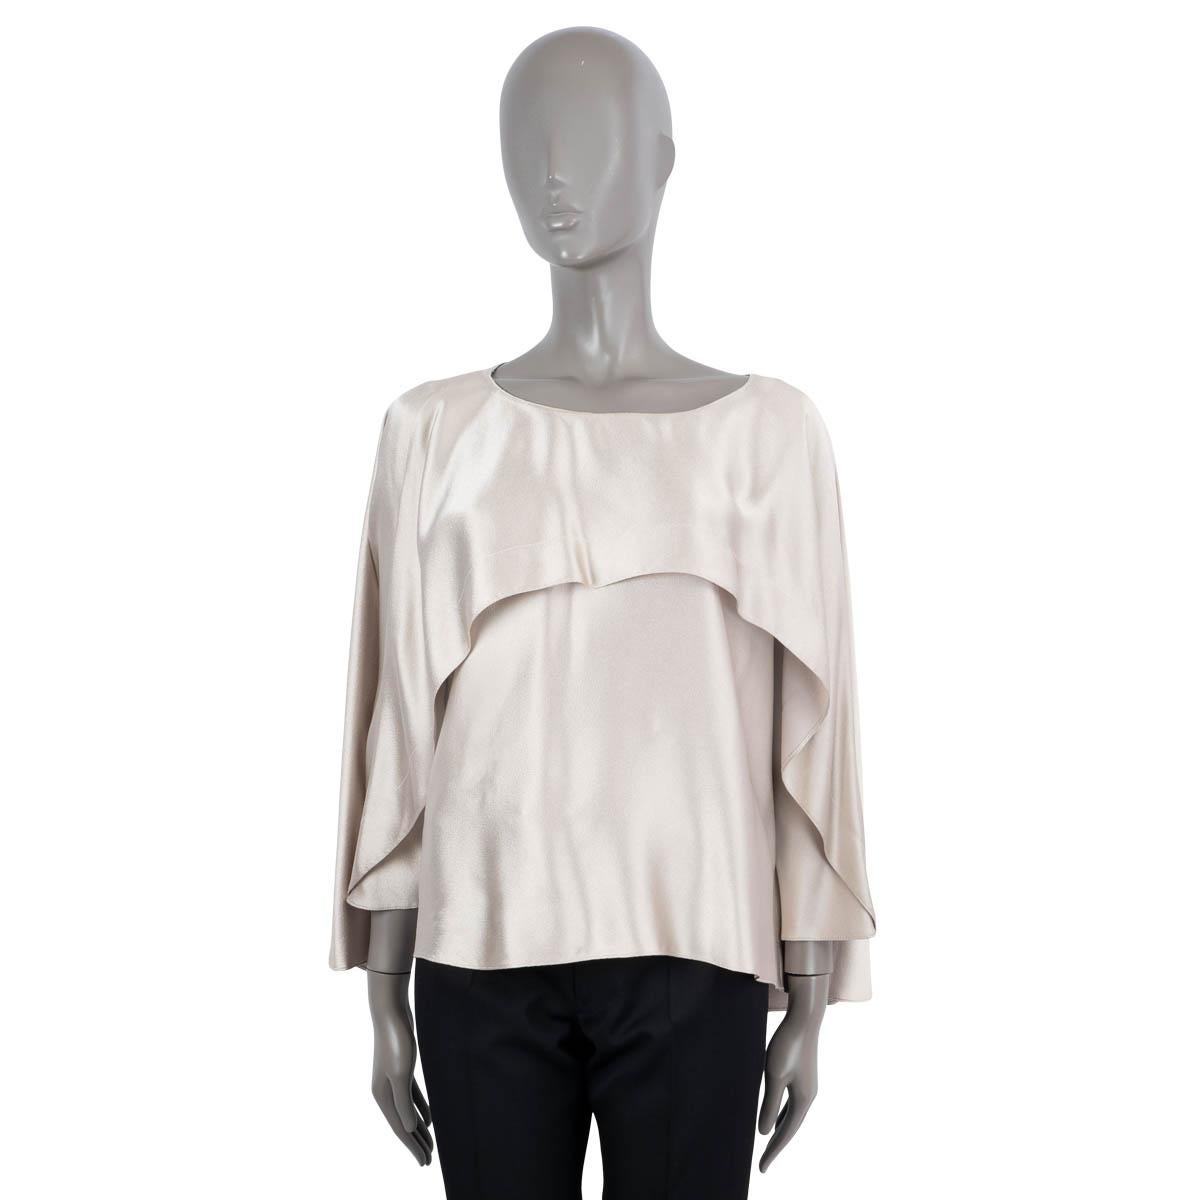 LANVIN champagnerfarbenes Seidenhemd 2014 OVERLAY SATIN Bluse Shirt 34 XS (Grau) im Angebot